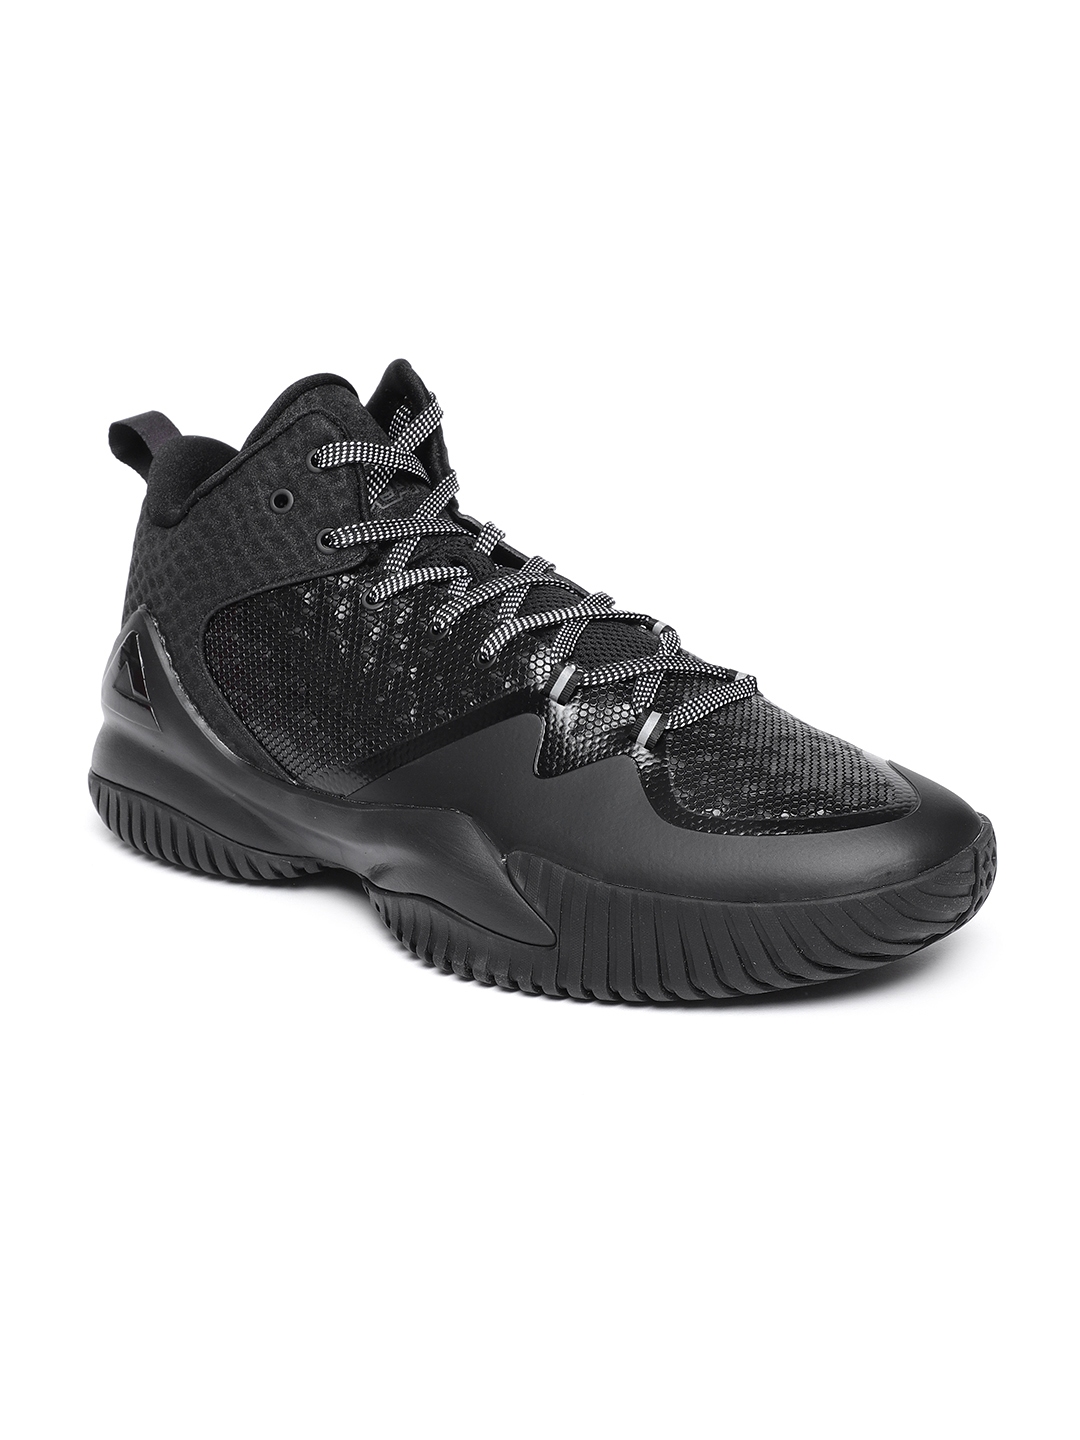 Buy PEAK Men Black Basketball Shoes - Sports Shoes for Men 8130283 | Myntra